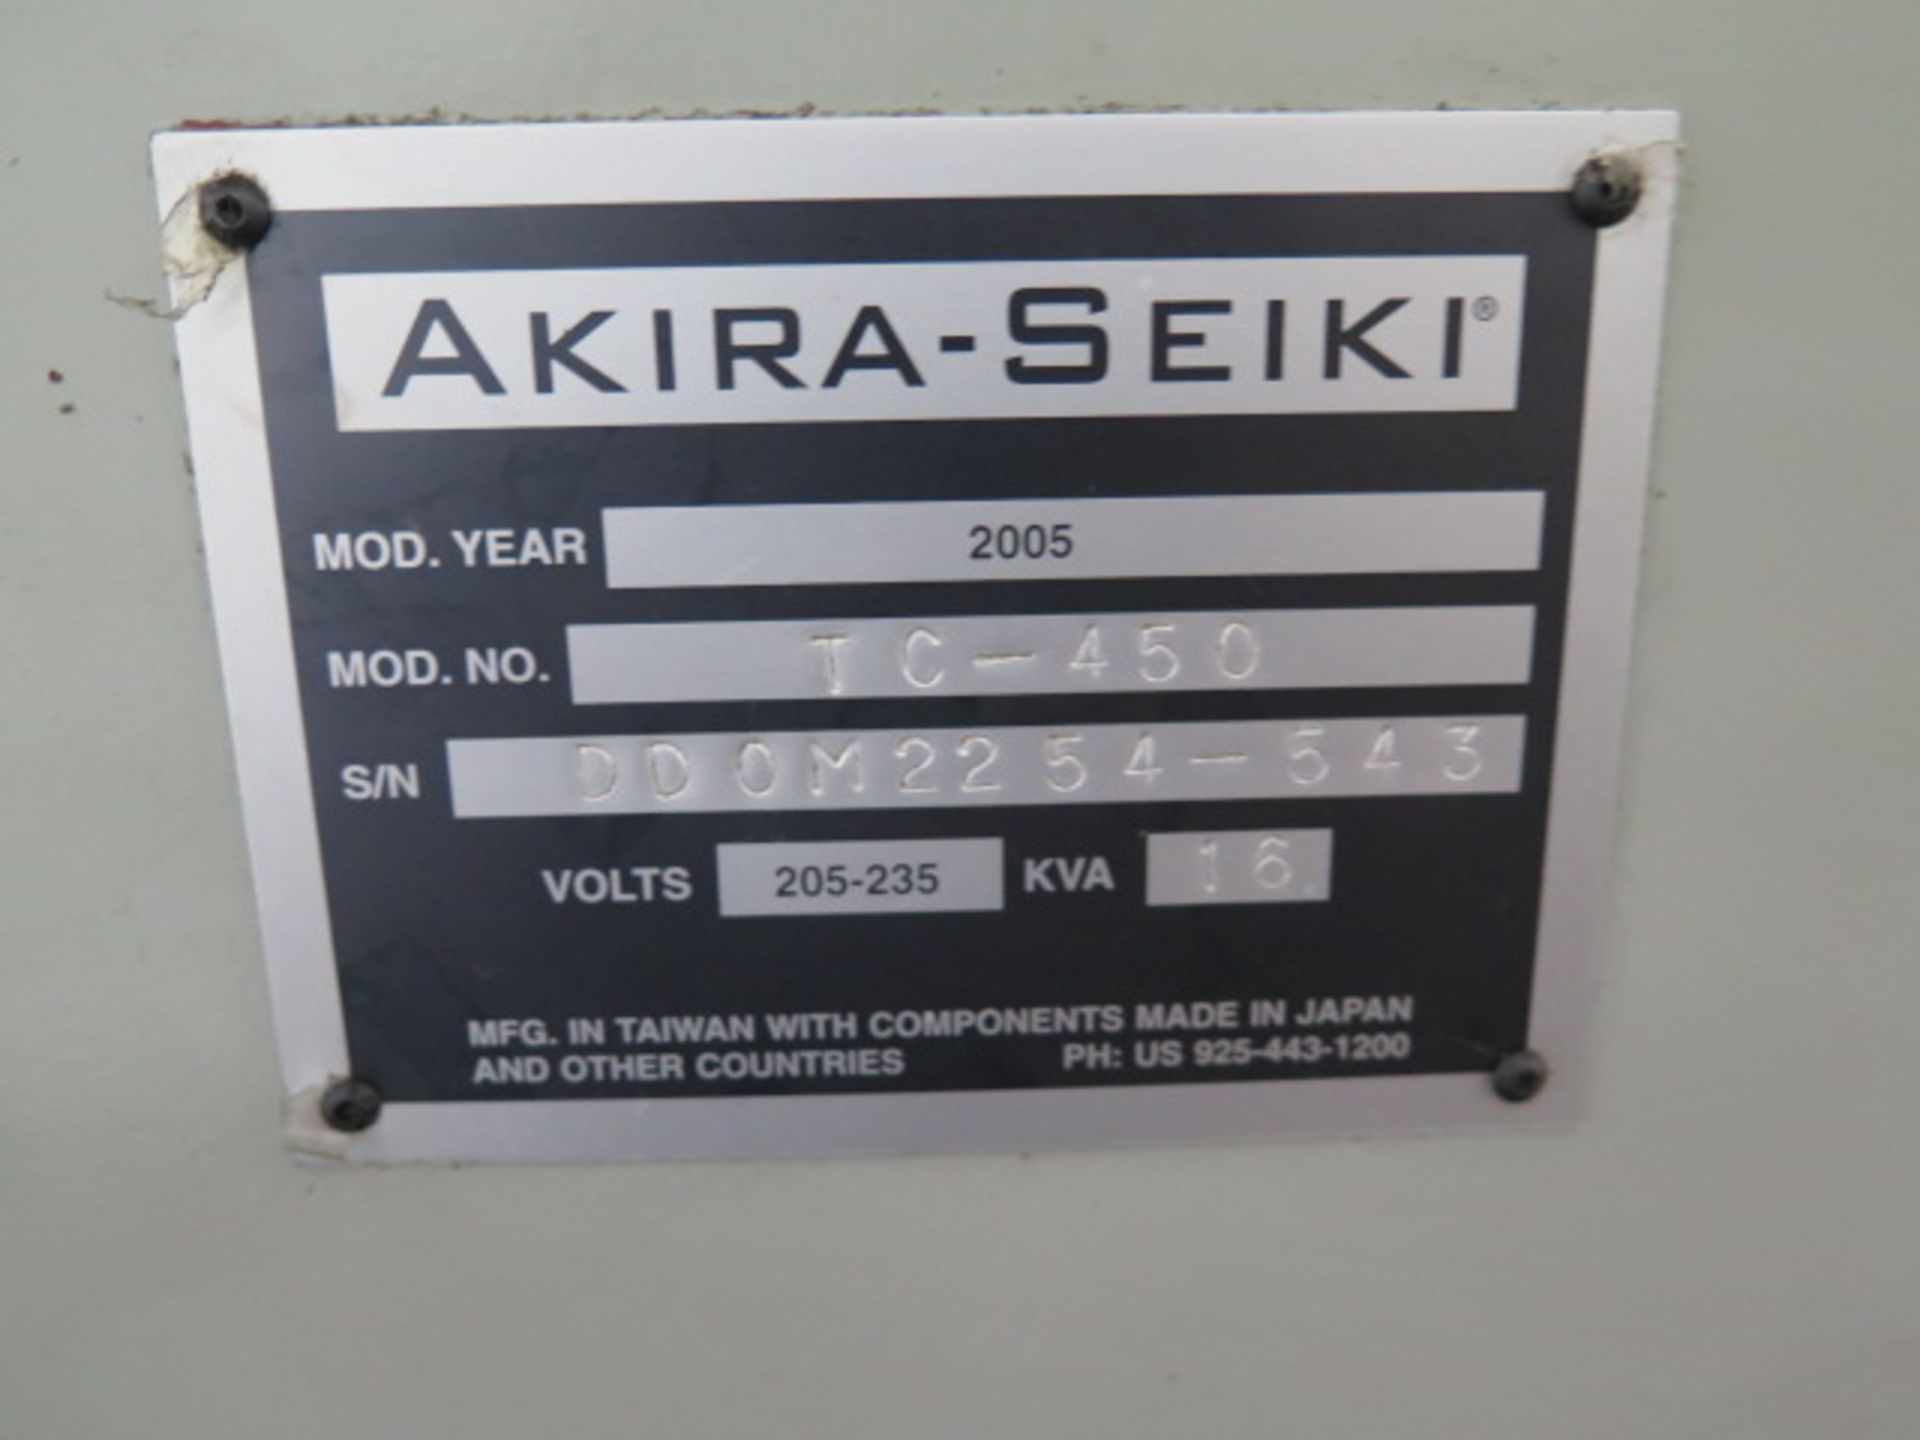 2005 Akira Seiki TC450 CNC Drilling/Tapping Machine s/n DD0M2259-543 w/ Mitsubishi Controls, 12- - Image 11 of 11